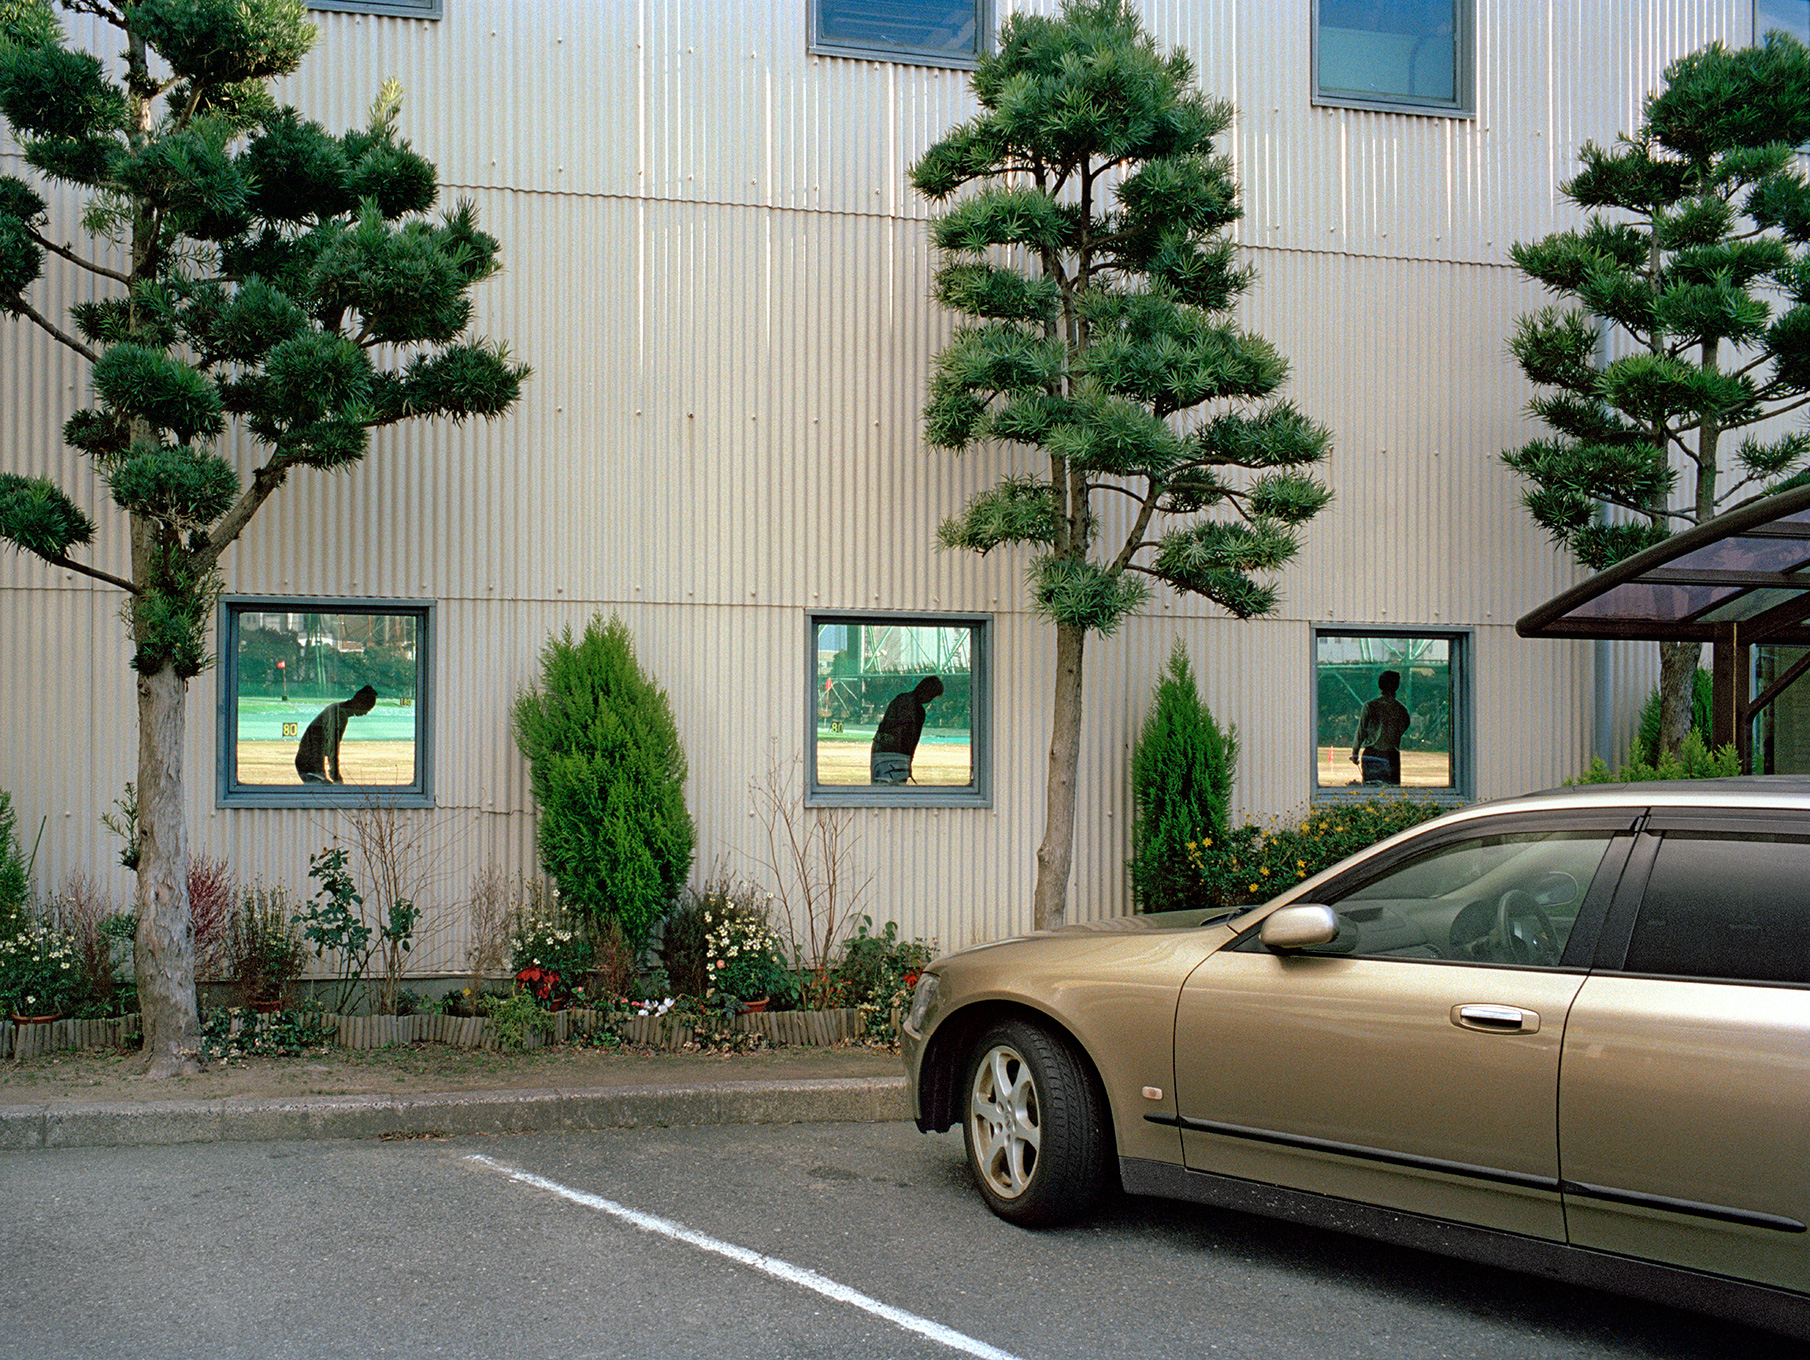   Golf driving range,  Misaki, 2011  